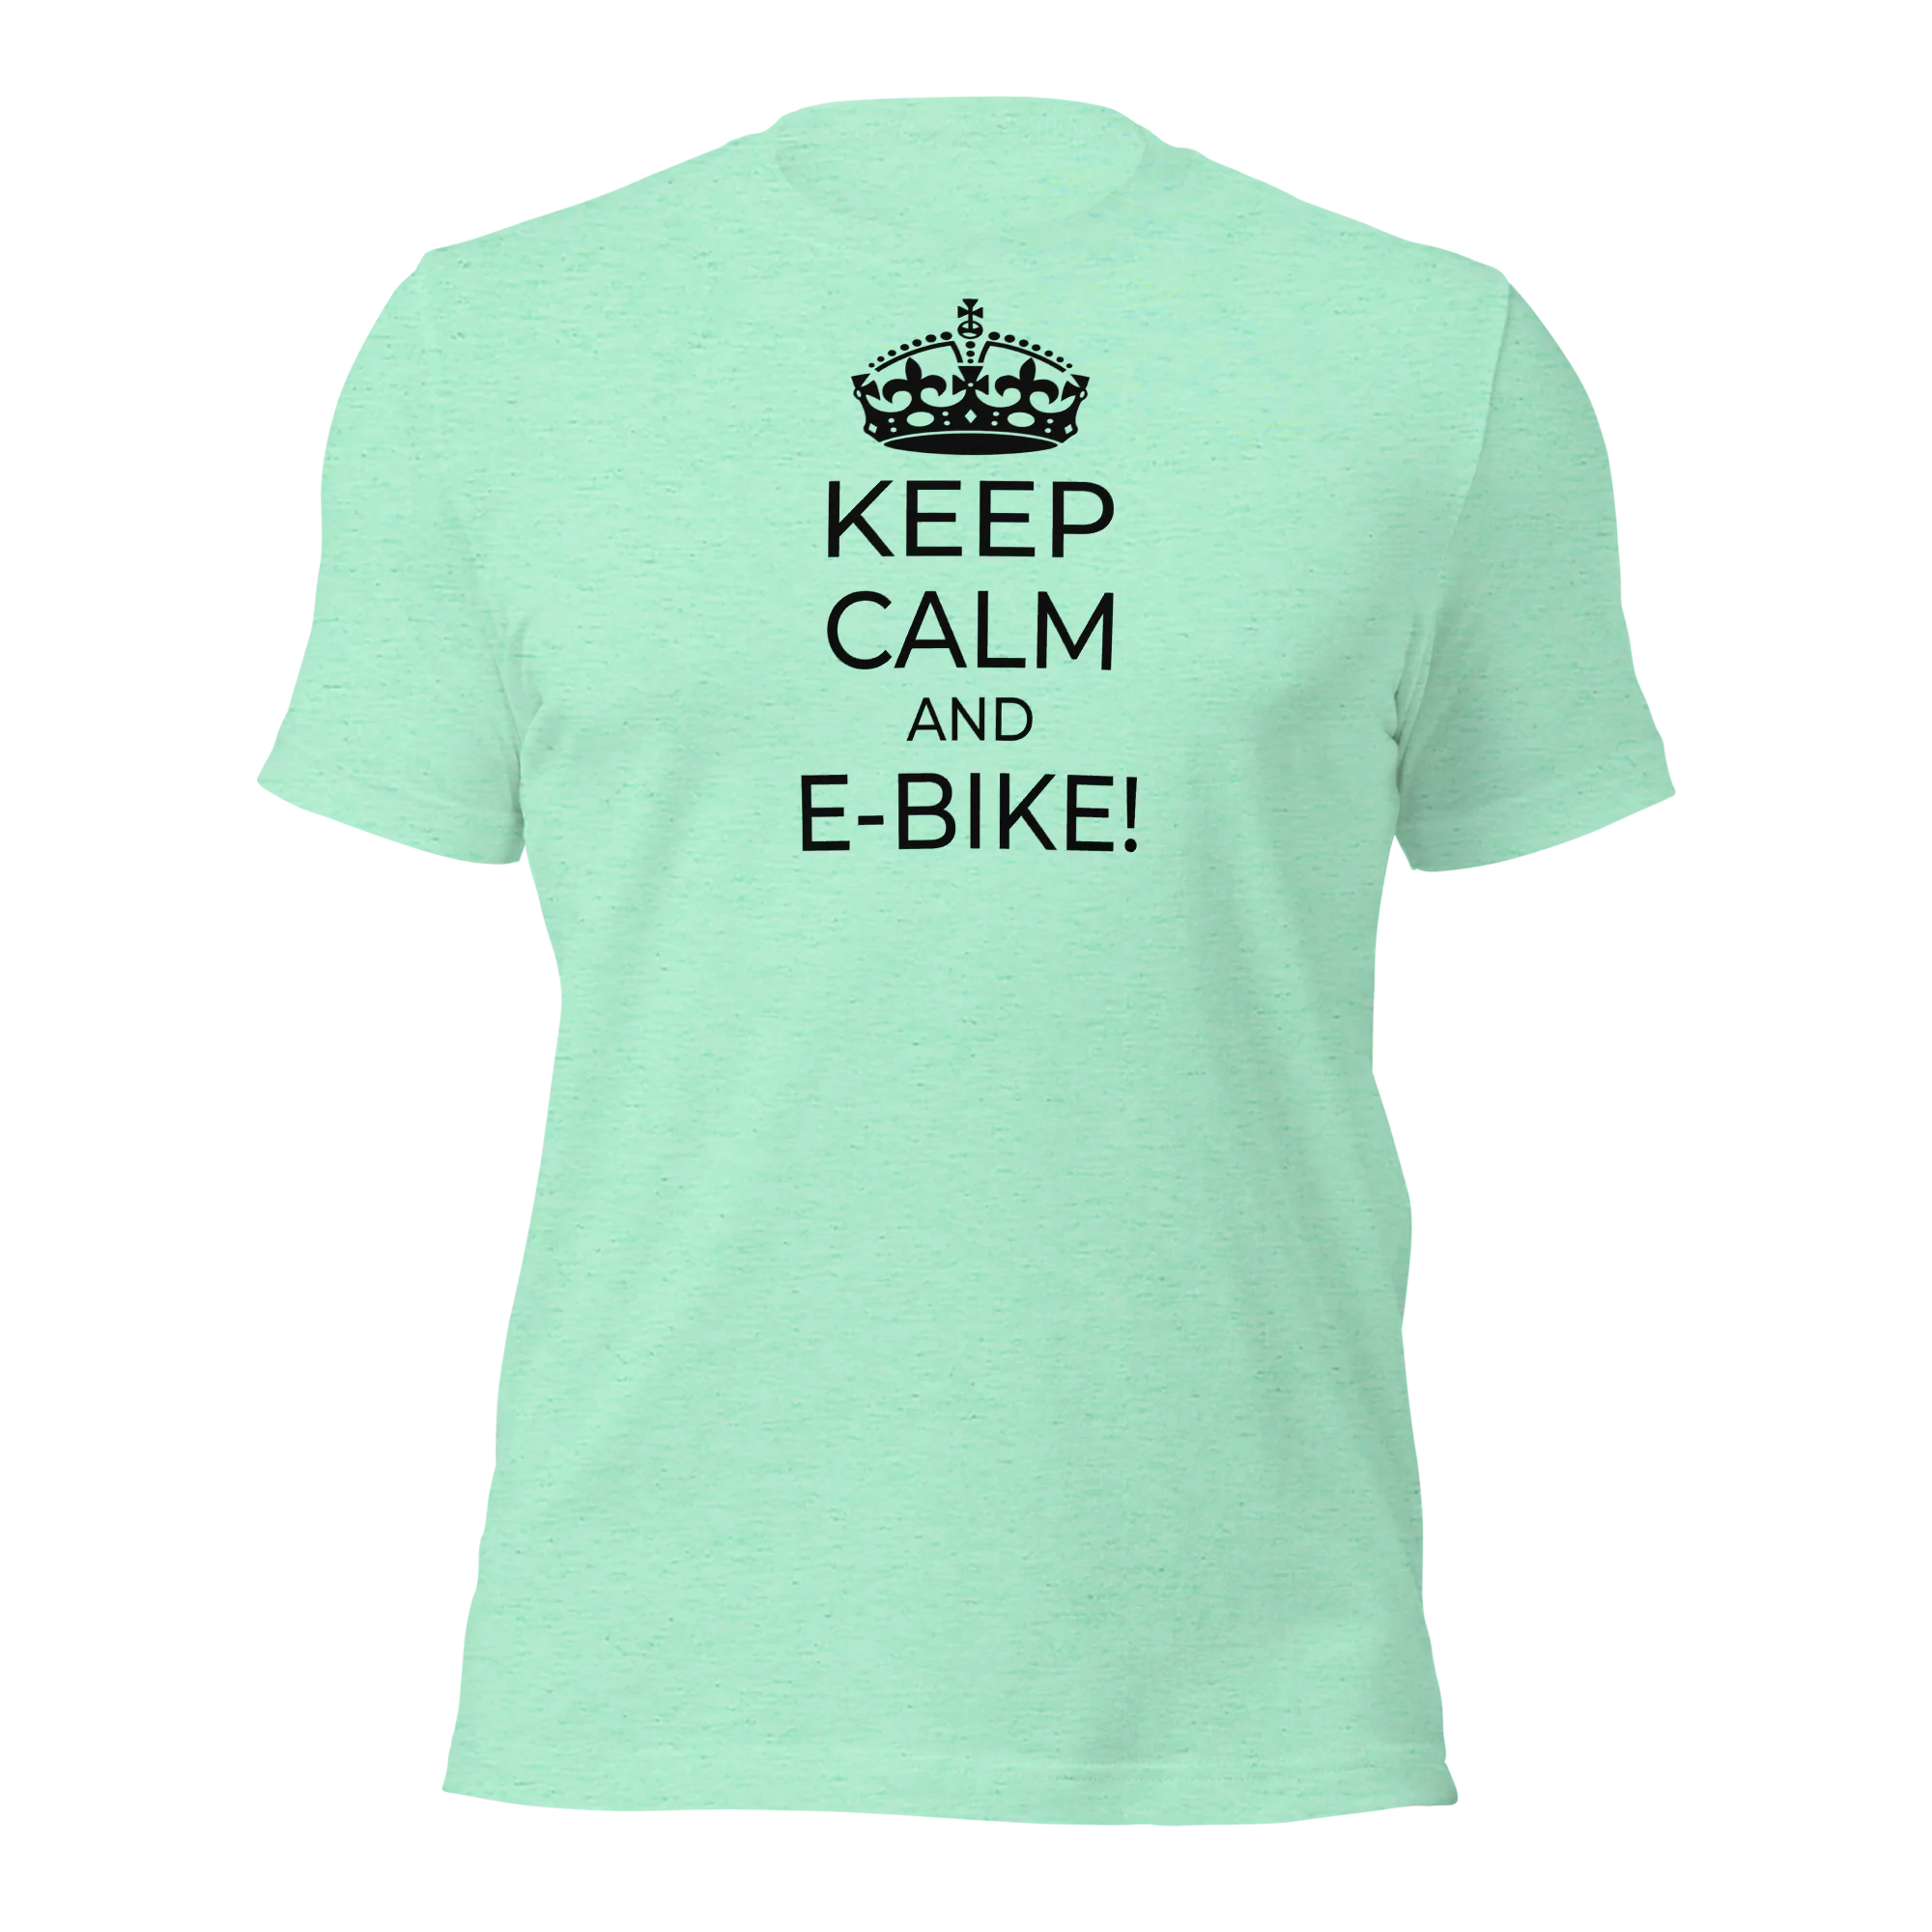 Funny T-Shirt: Keep Calm And E-Bike (Mint Green)